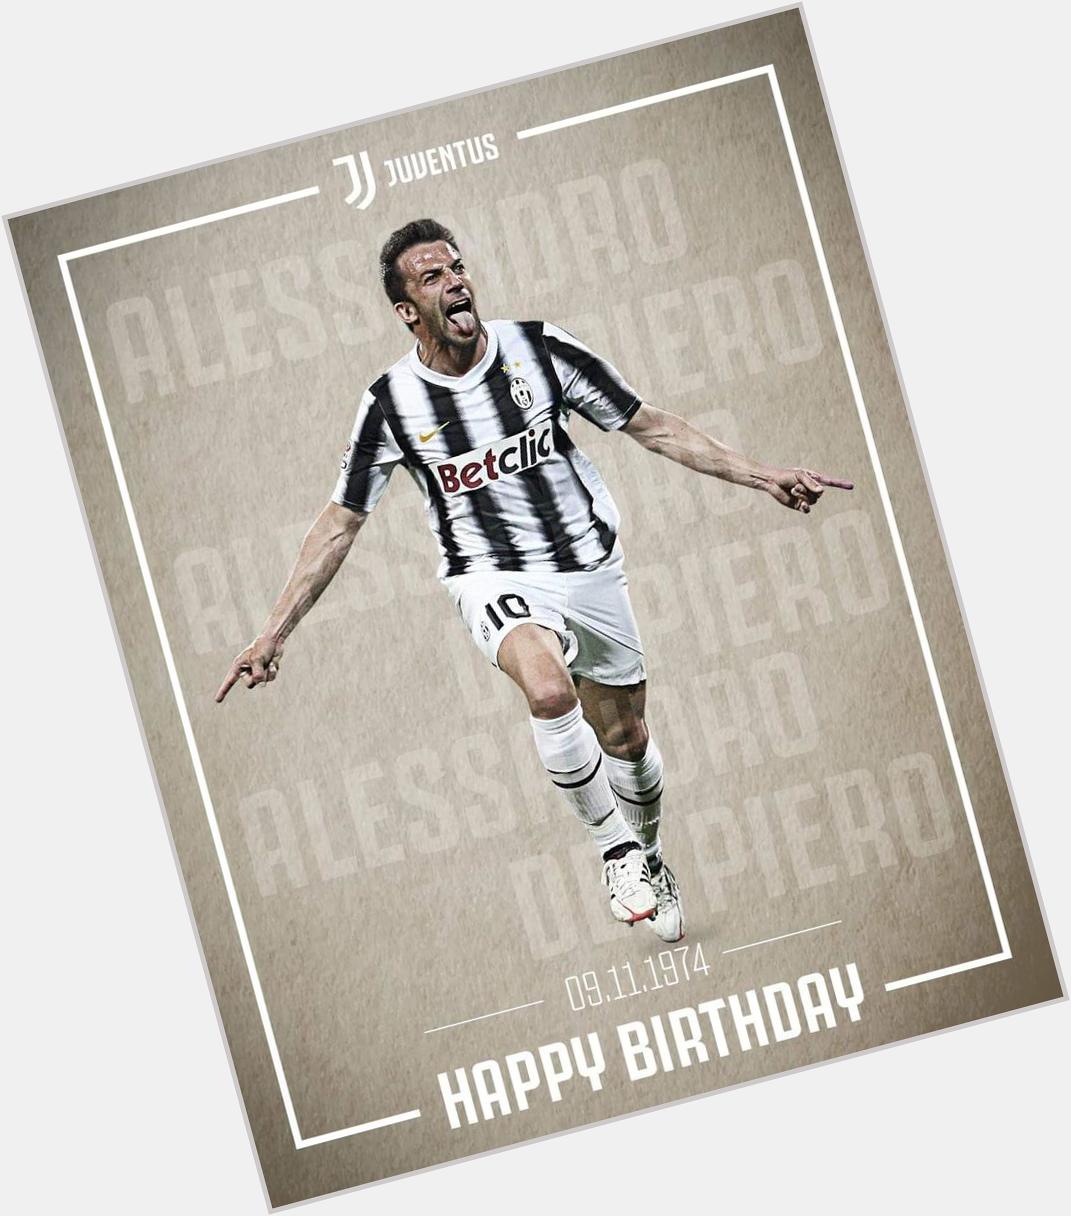 Happy birthday, Alessandro Del Piero  Champion, legend, symbol  